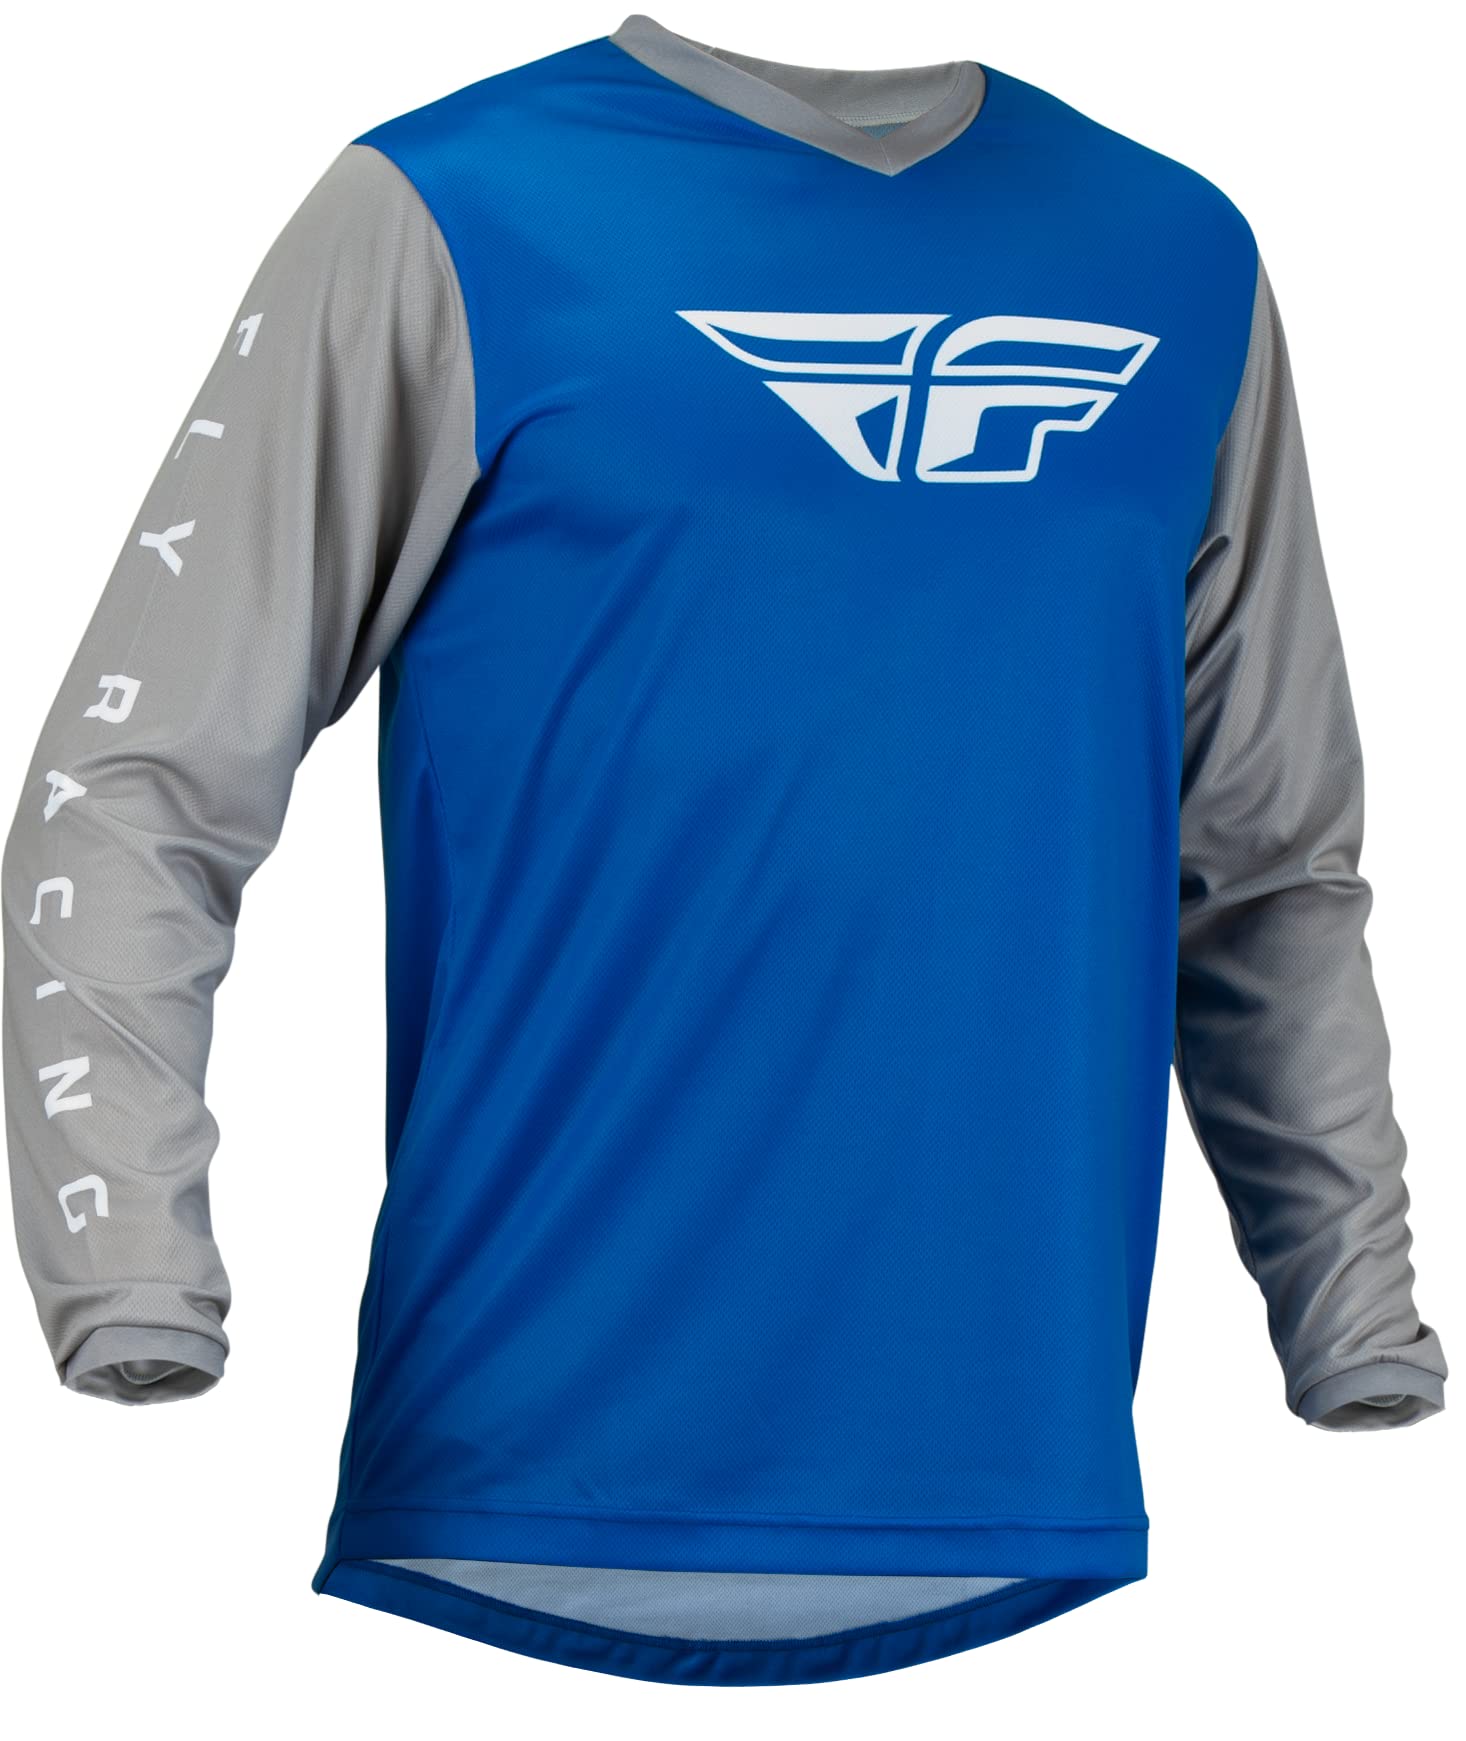 Fly Racing Herrenhemd, blau/grau, L von Fly Racing